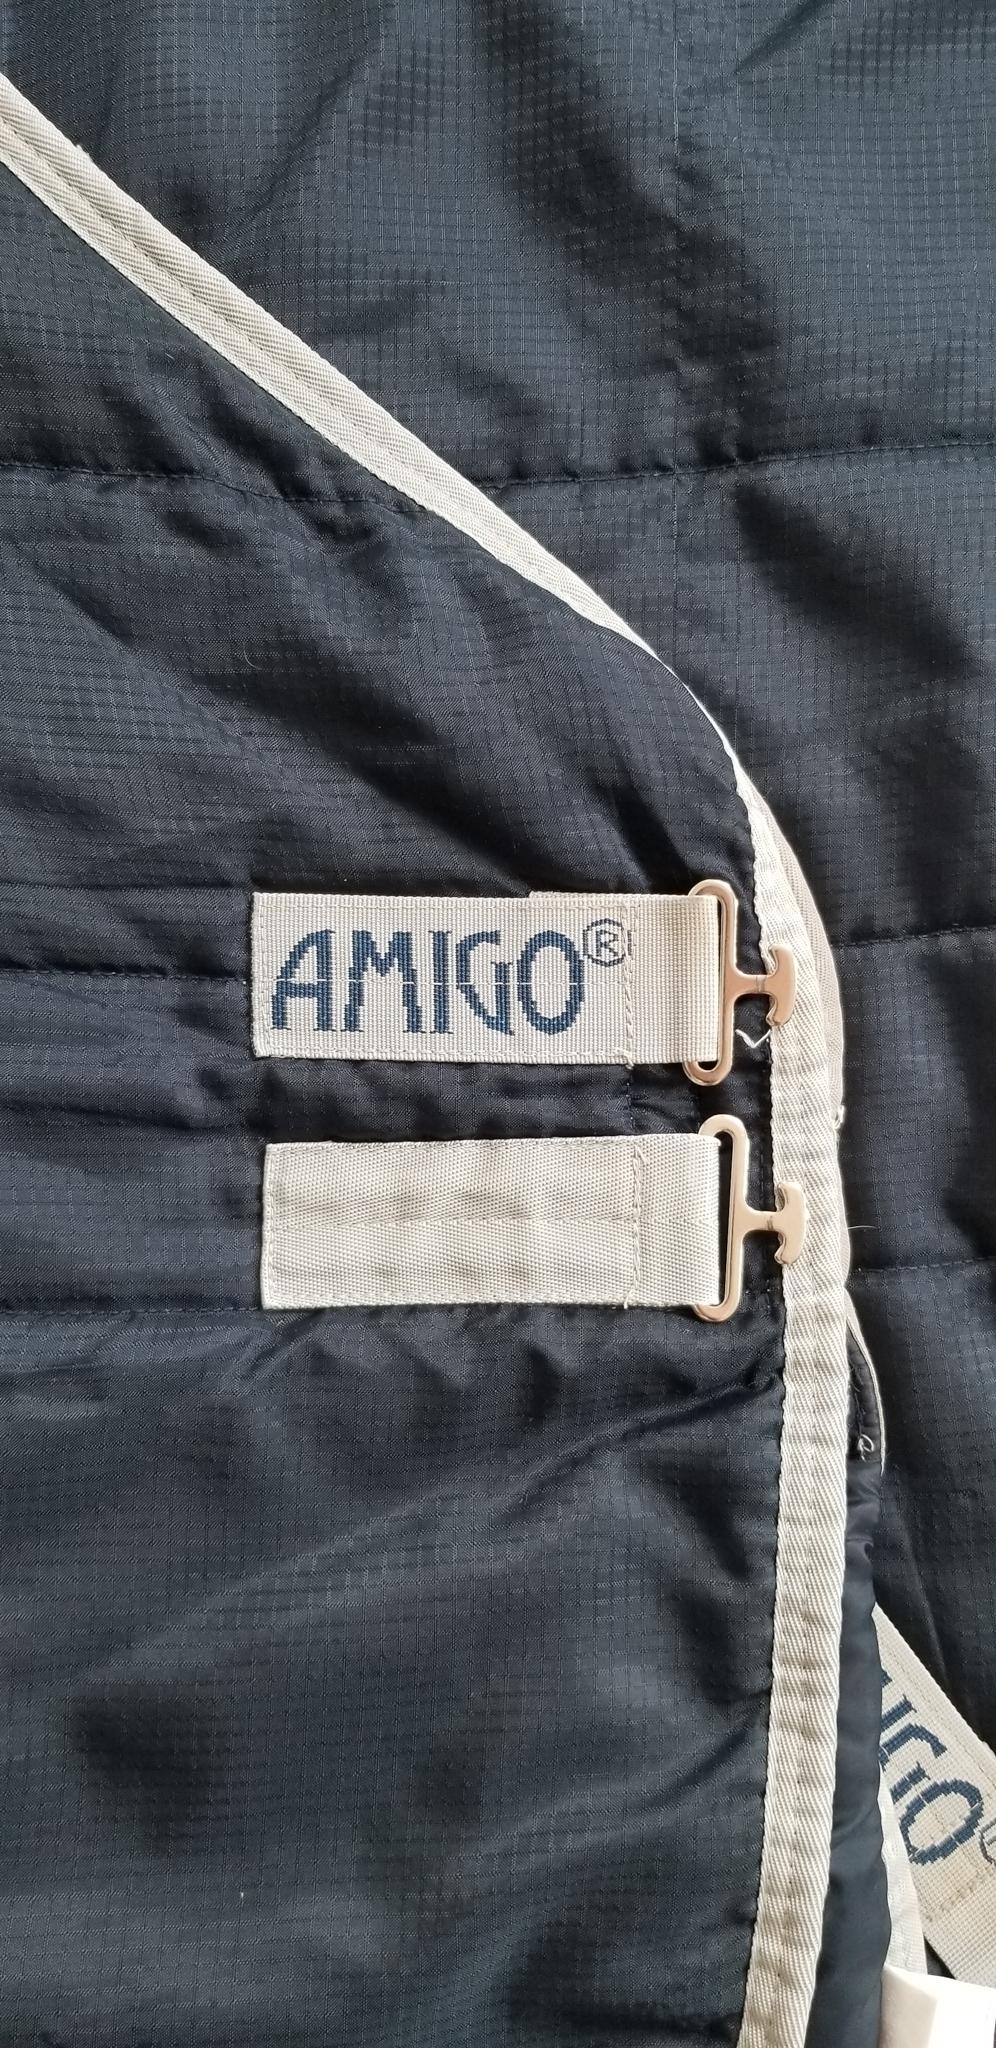 Amigo Insulator Medium 200g Stable Blanket - Navy - 78"